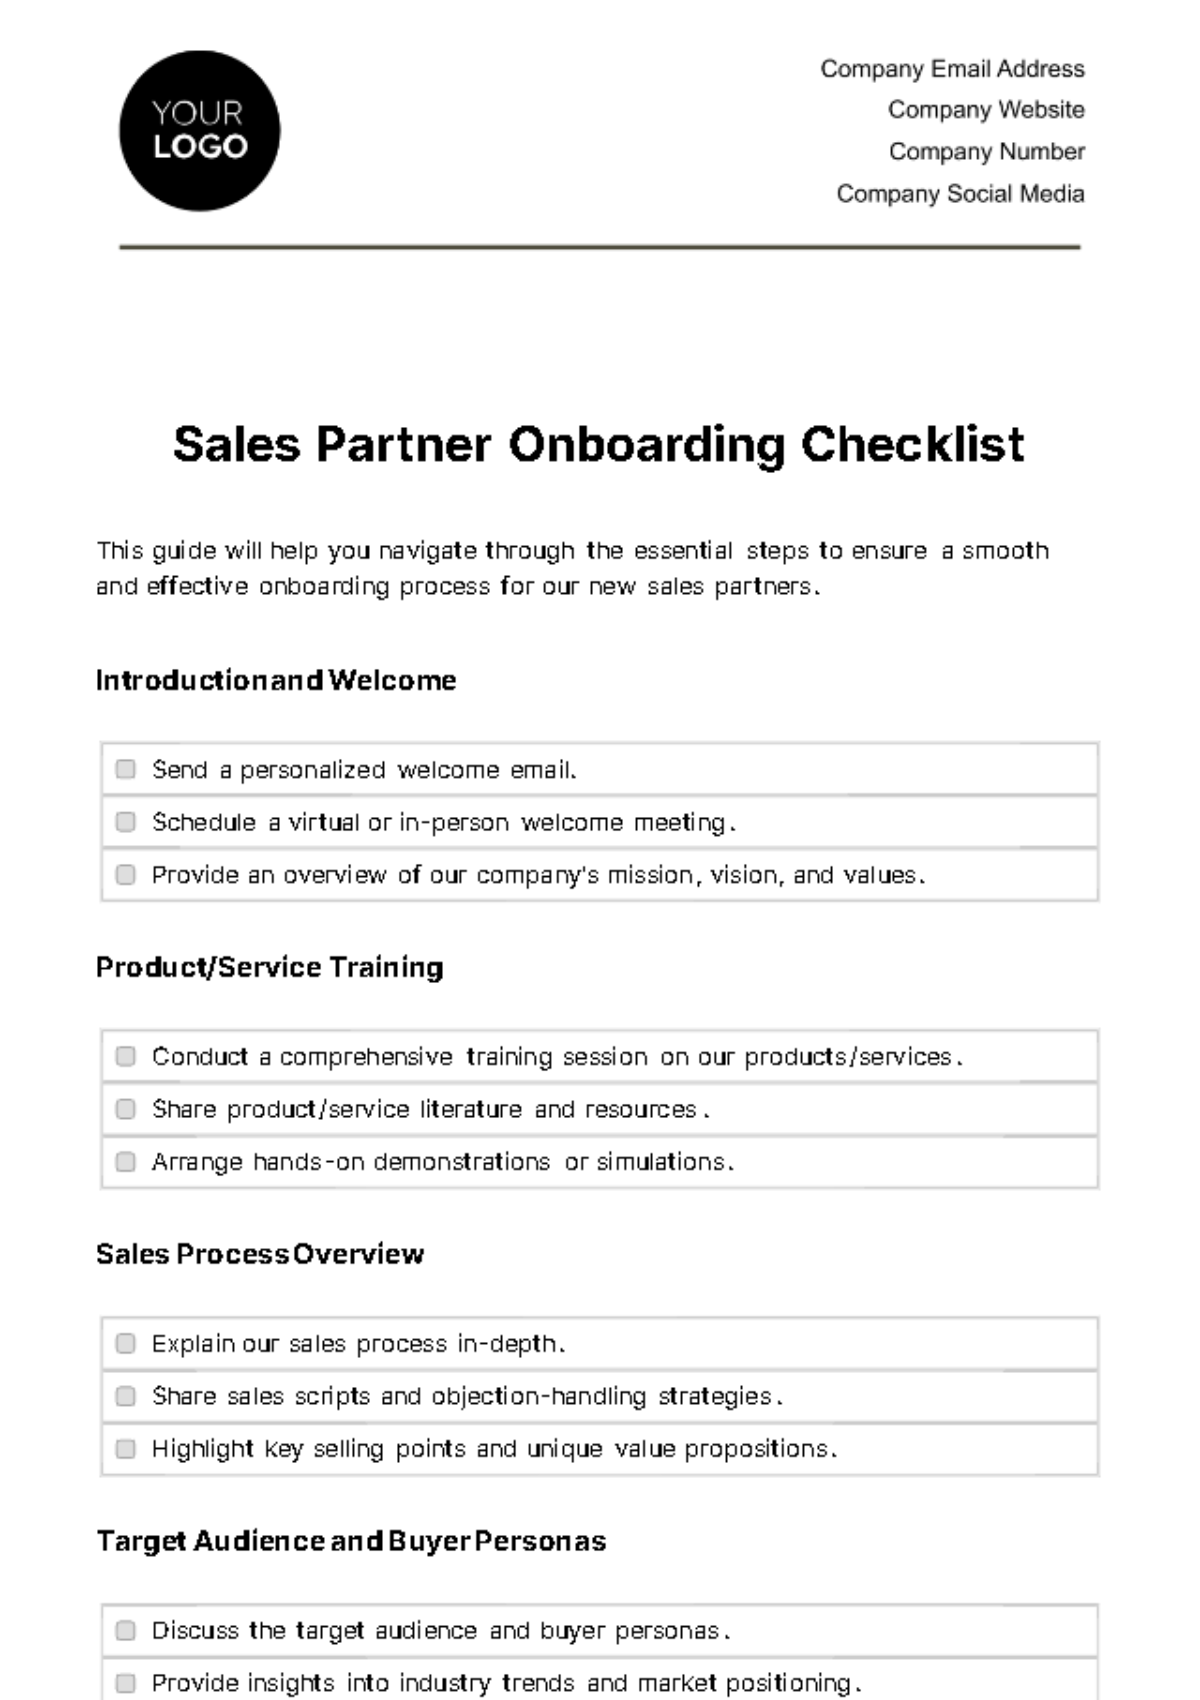 Sales Partner Onboarding Checklist Template